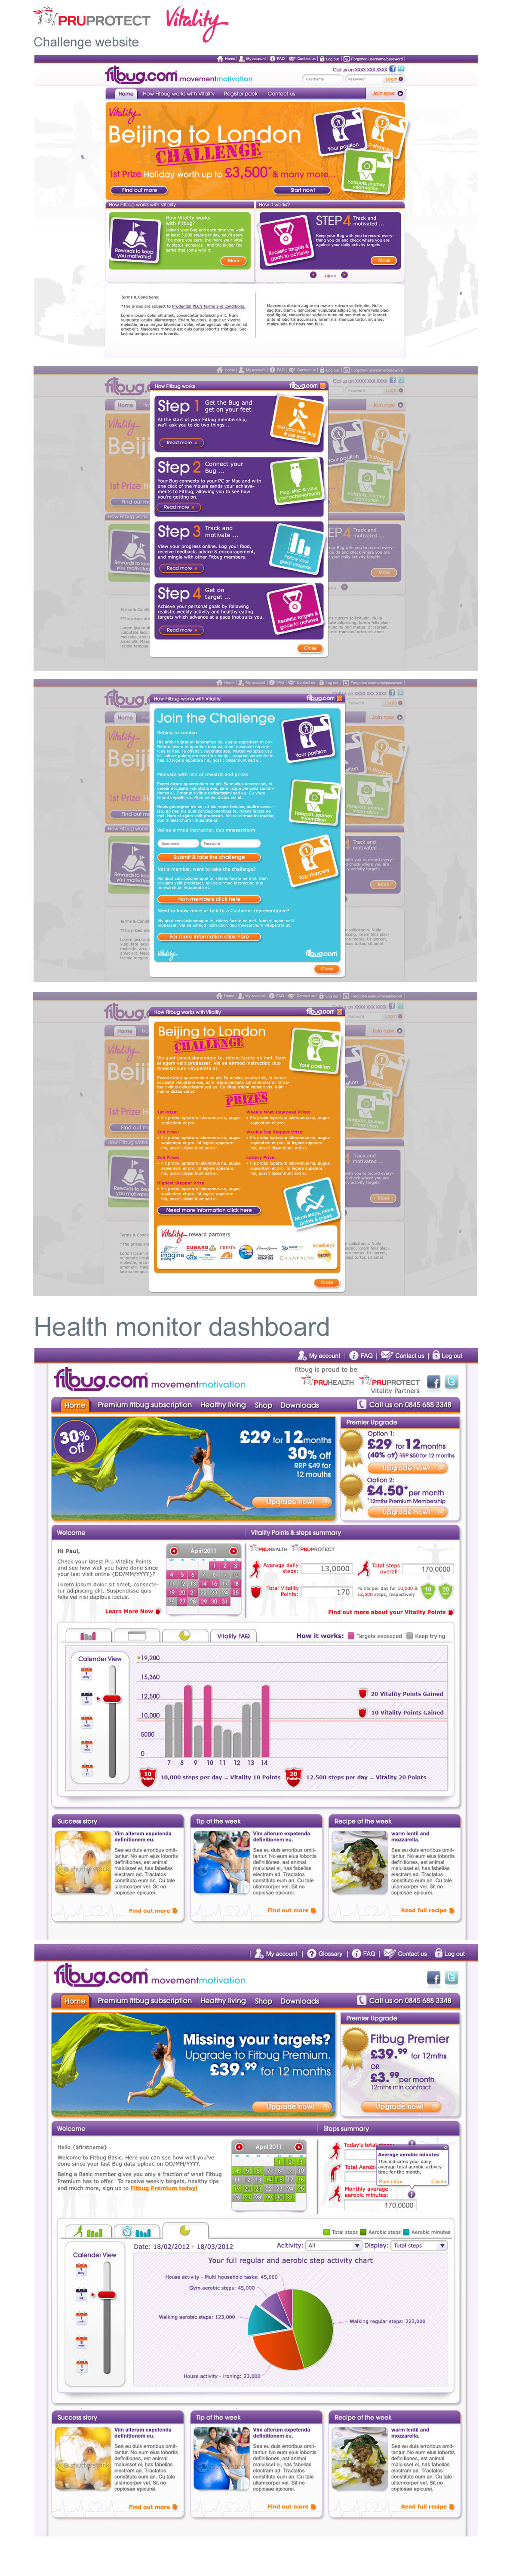 Health vitality pru health insurance Competition health monitor dashboard